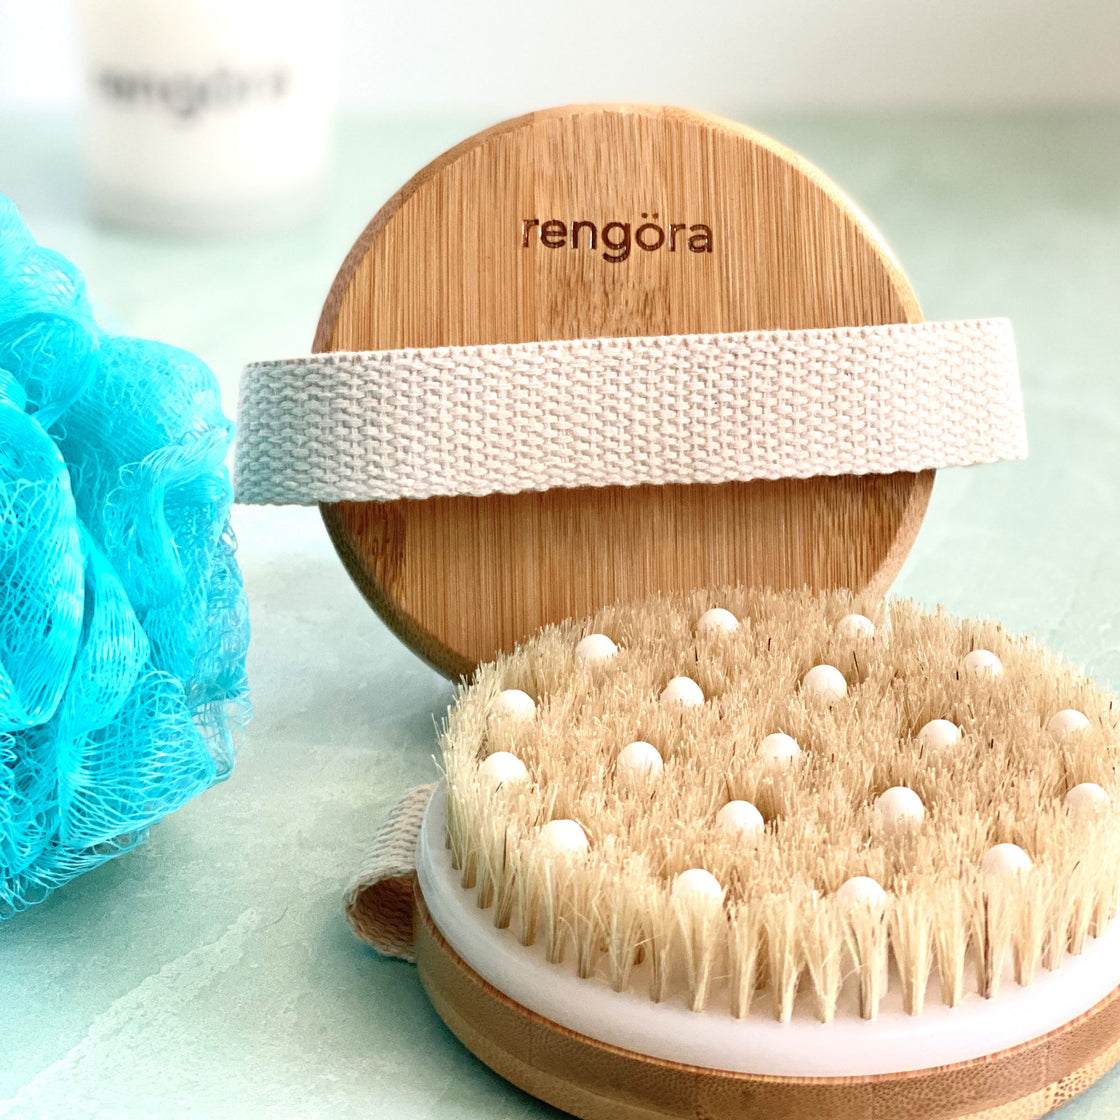 rengora massage nodules on bamboo circular brush shown with blue bath loofah